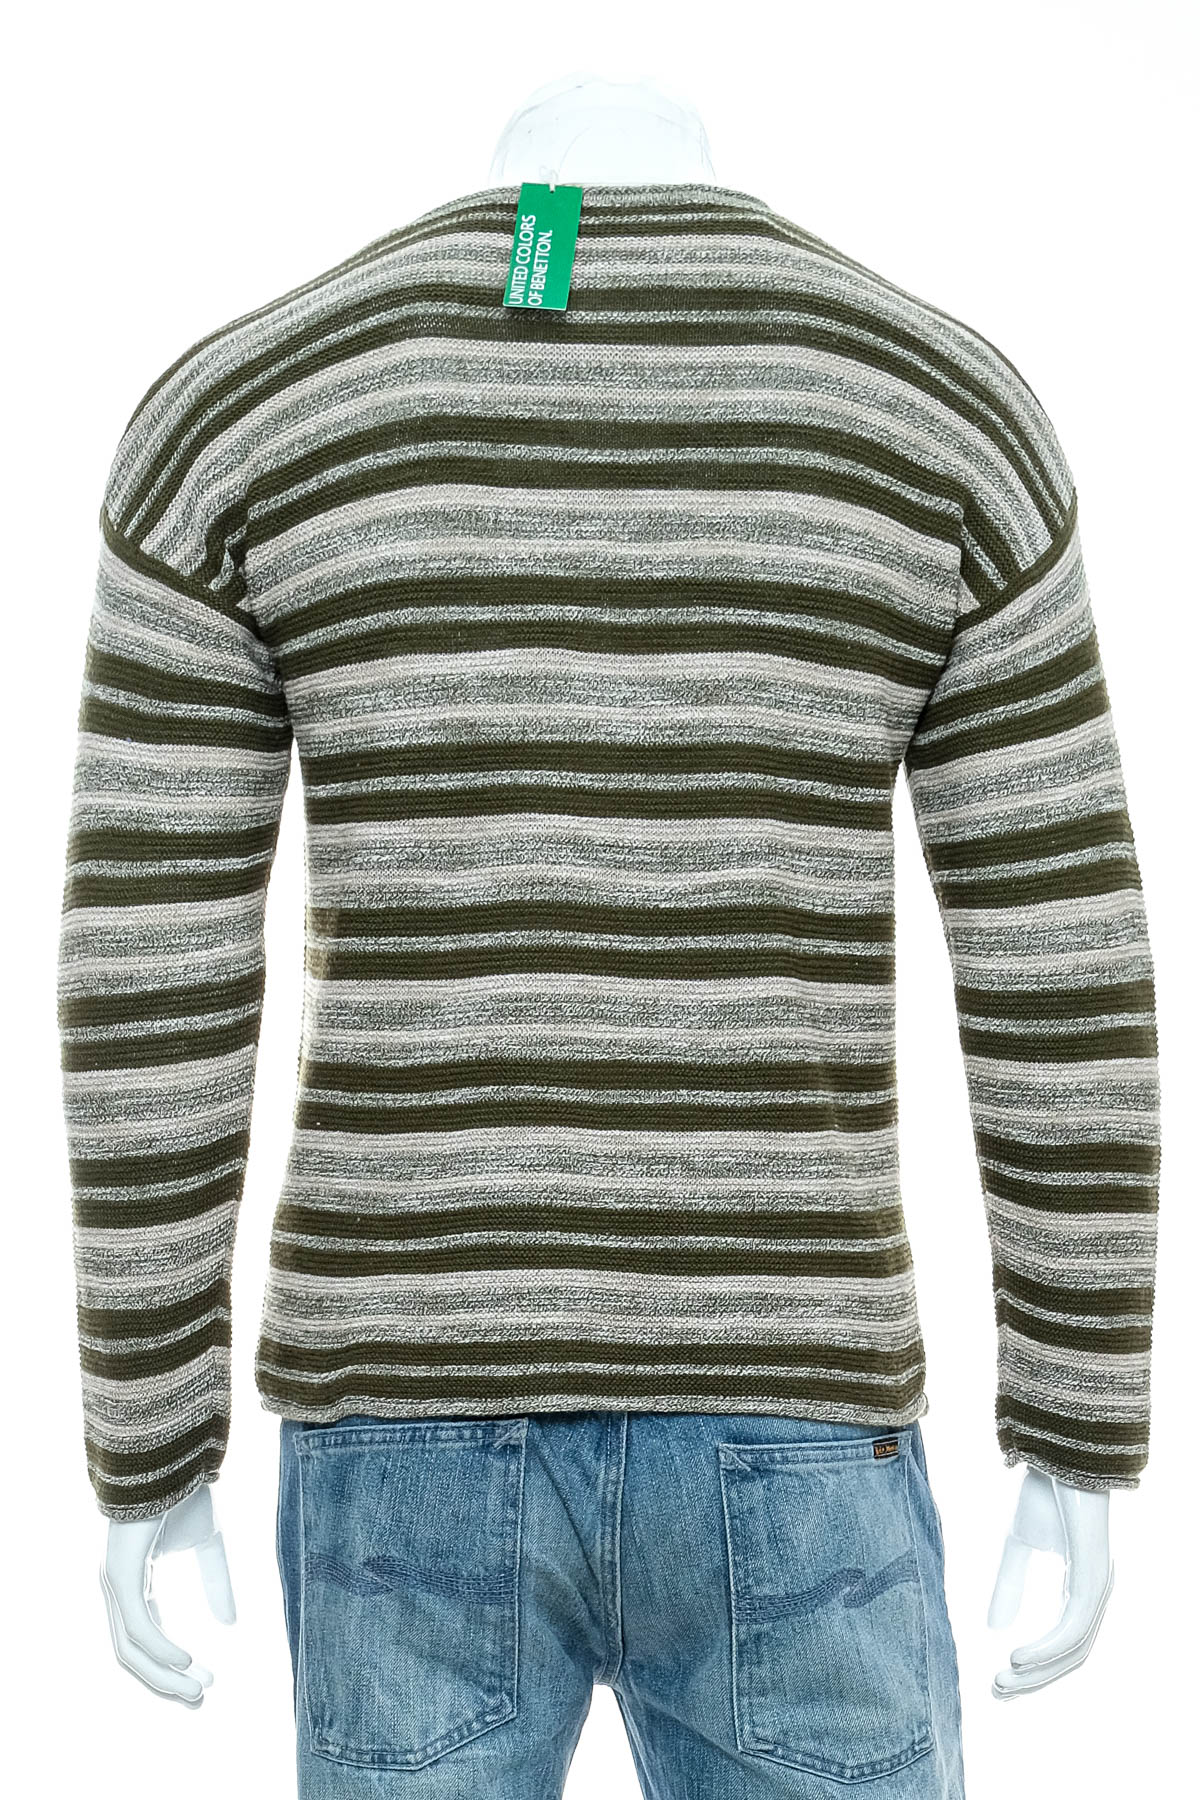 Men's sweater - United Colors of Benetton - 1